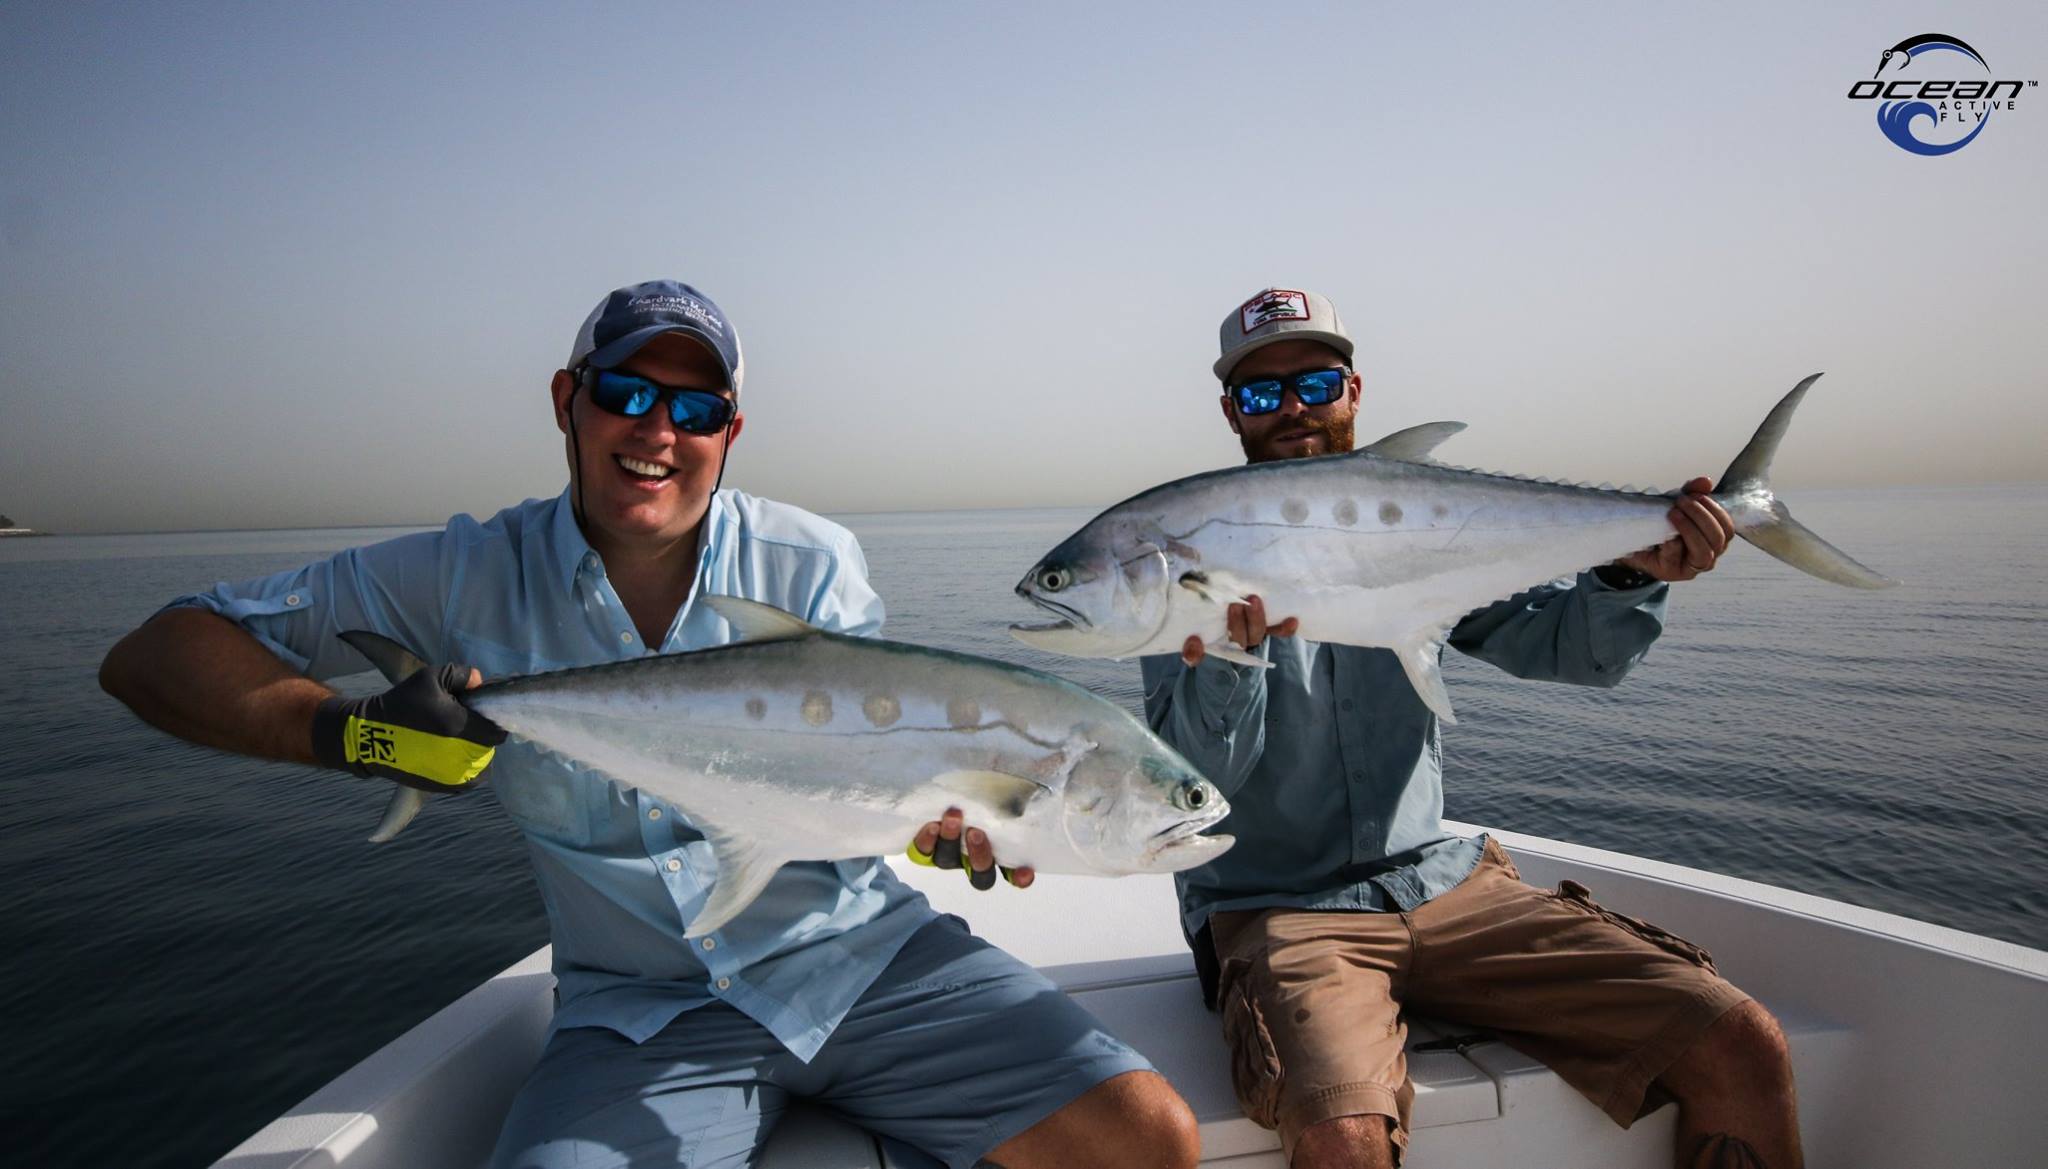 Dubai fishing, Dubai queenfish, Dubai fly fishing, Dubai stopover, Dubai holiday